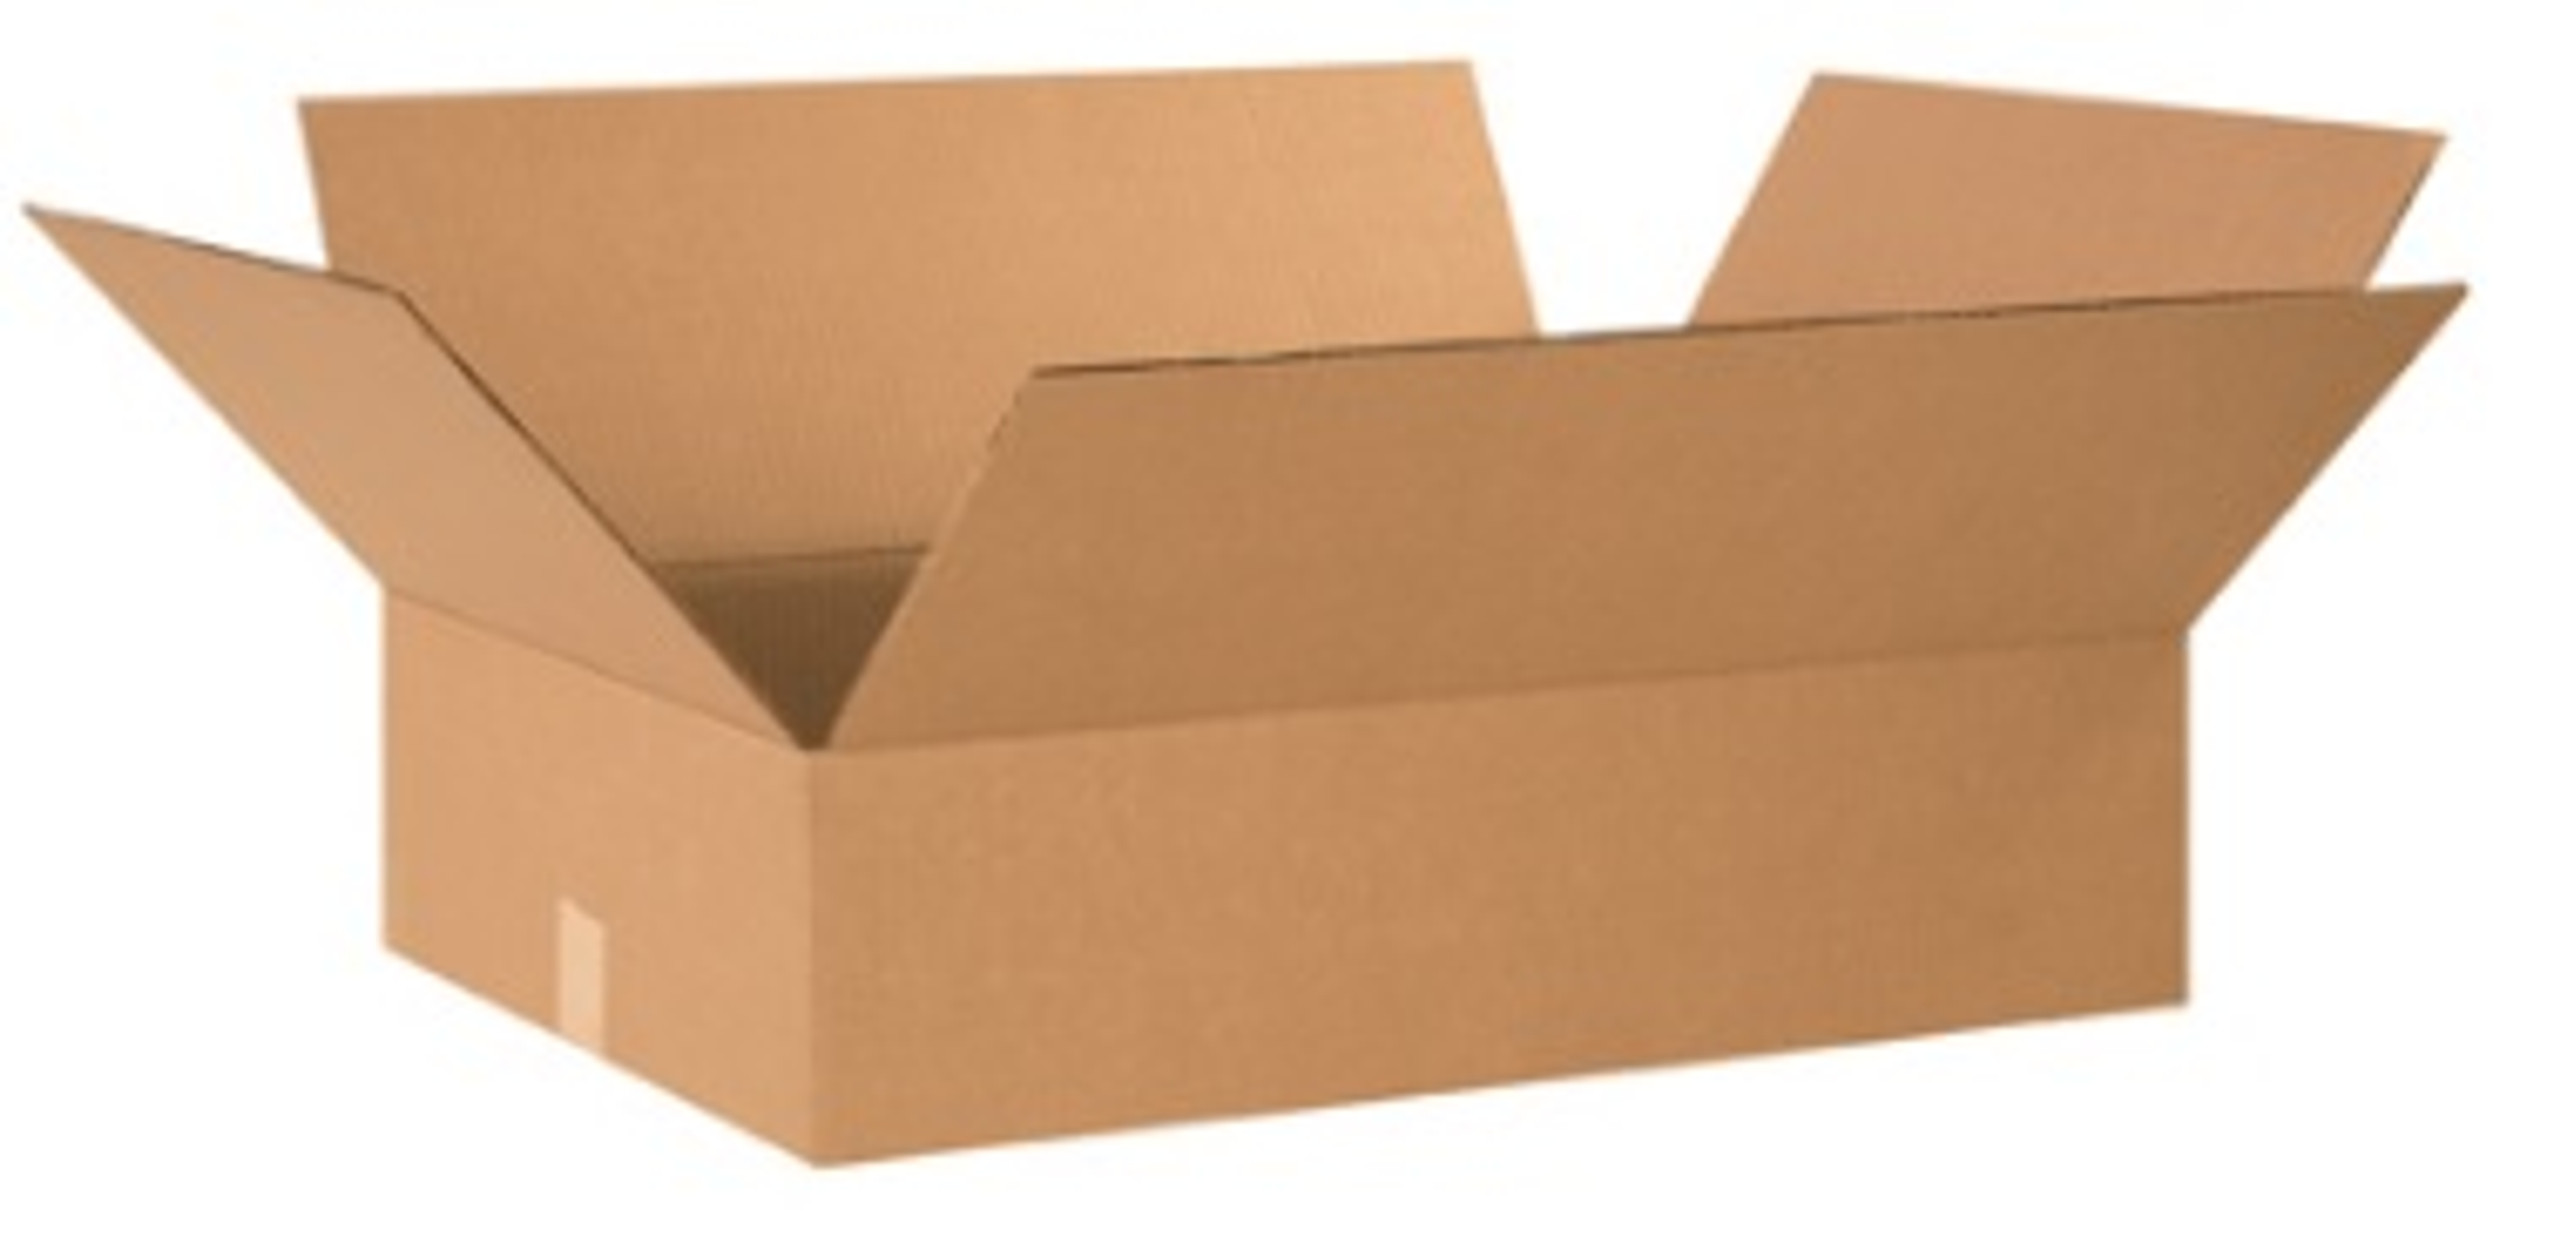 cardboard box for international travel